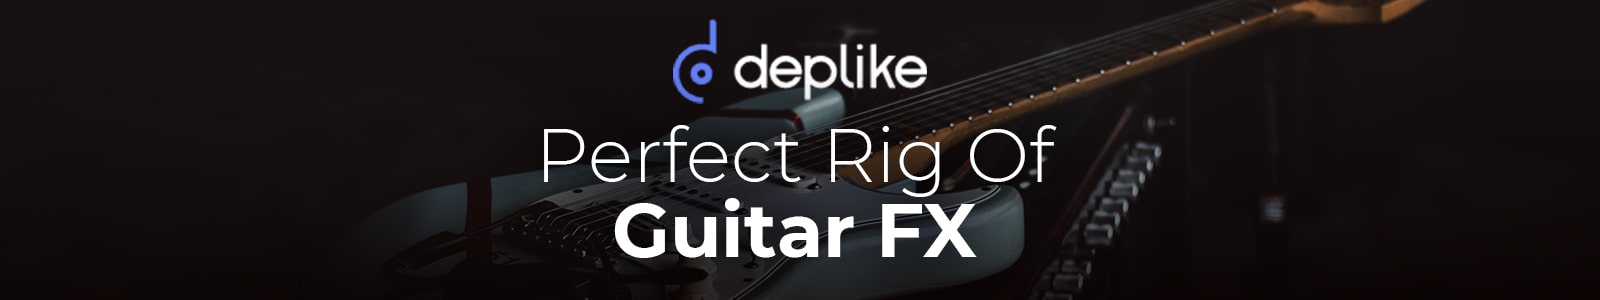 Guitar FX Bundle by Deplike